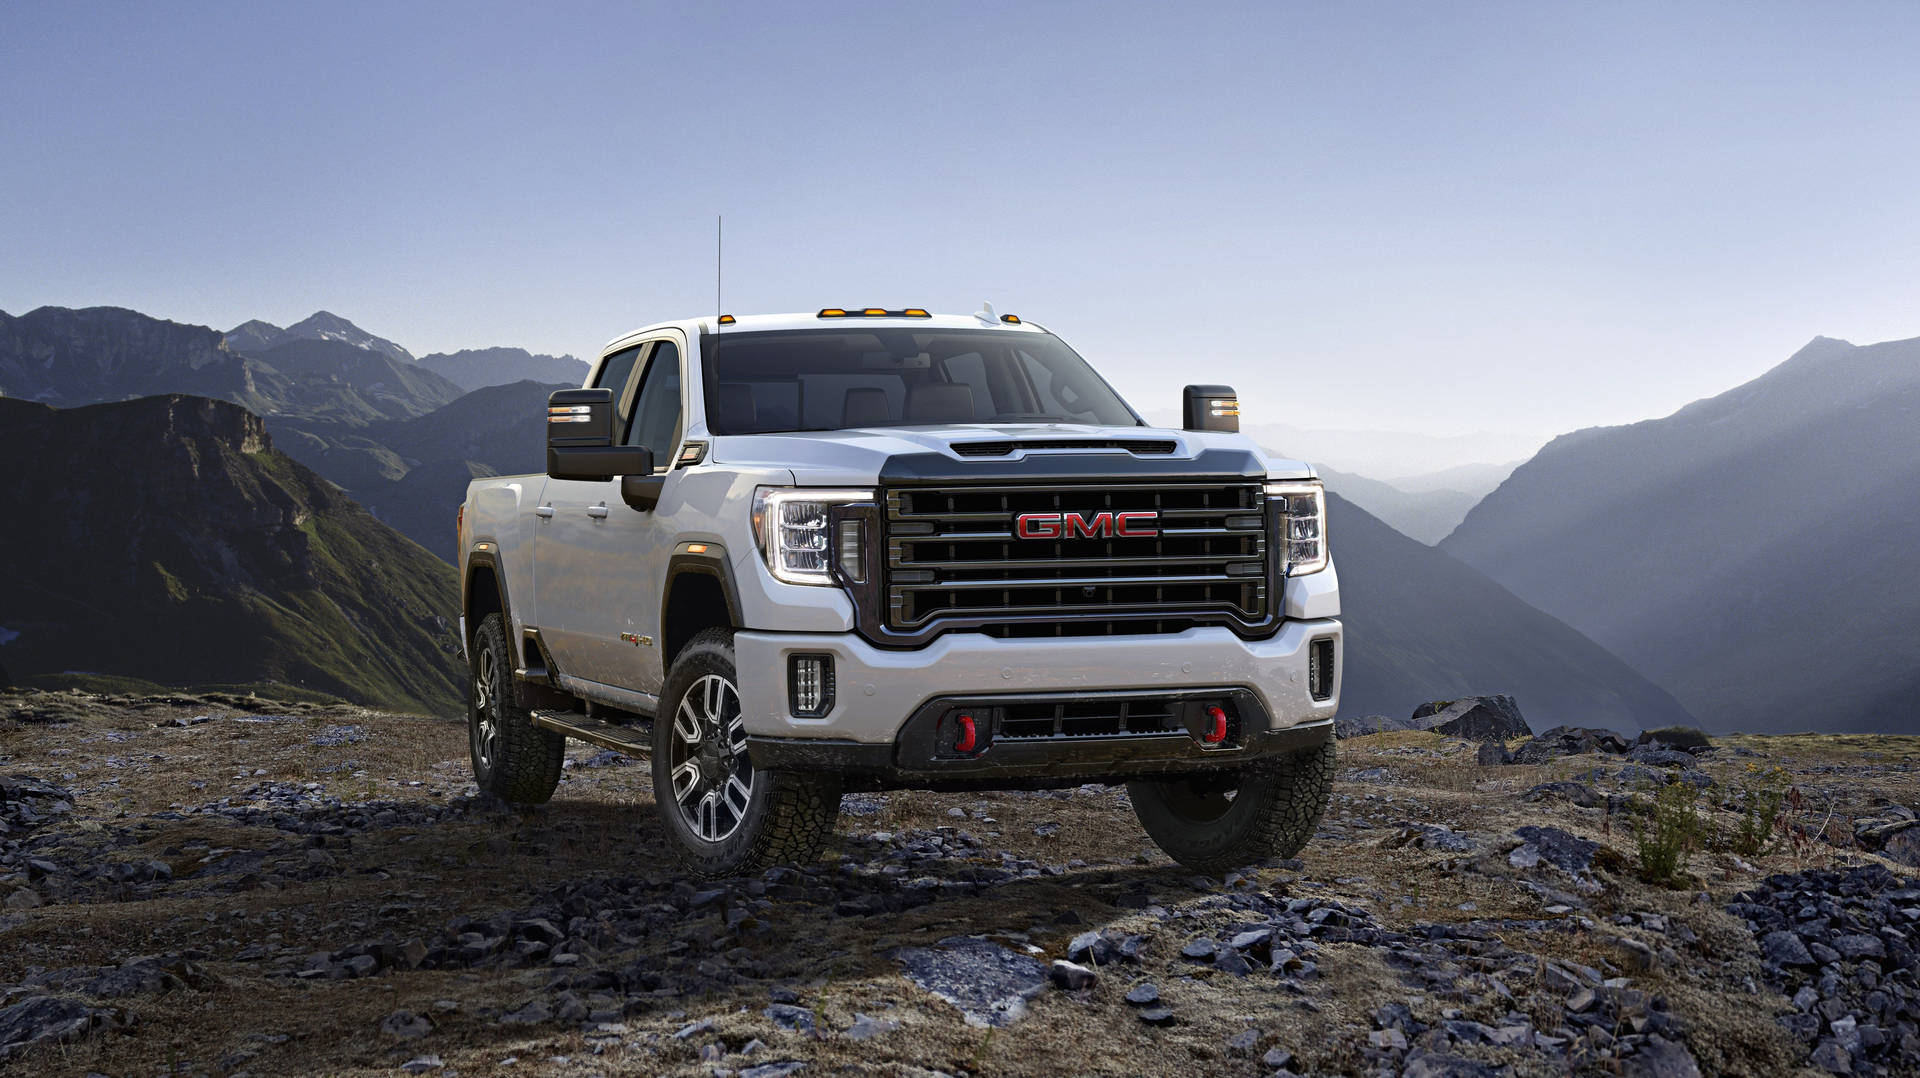 "Rugged GMC Truck Conquering Rocky Mountain Terrain" Wallpaper